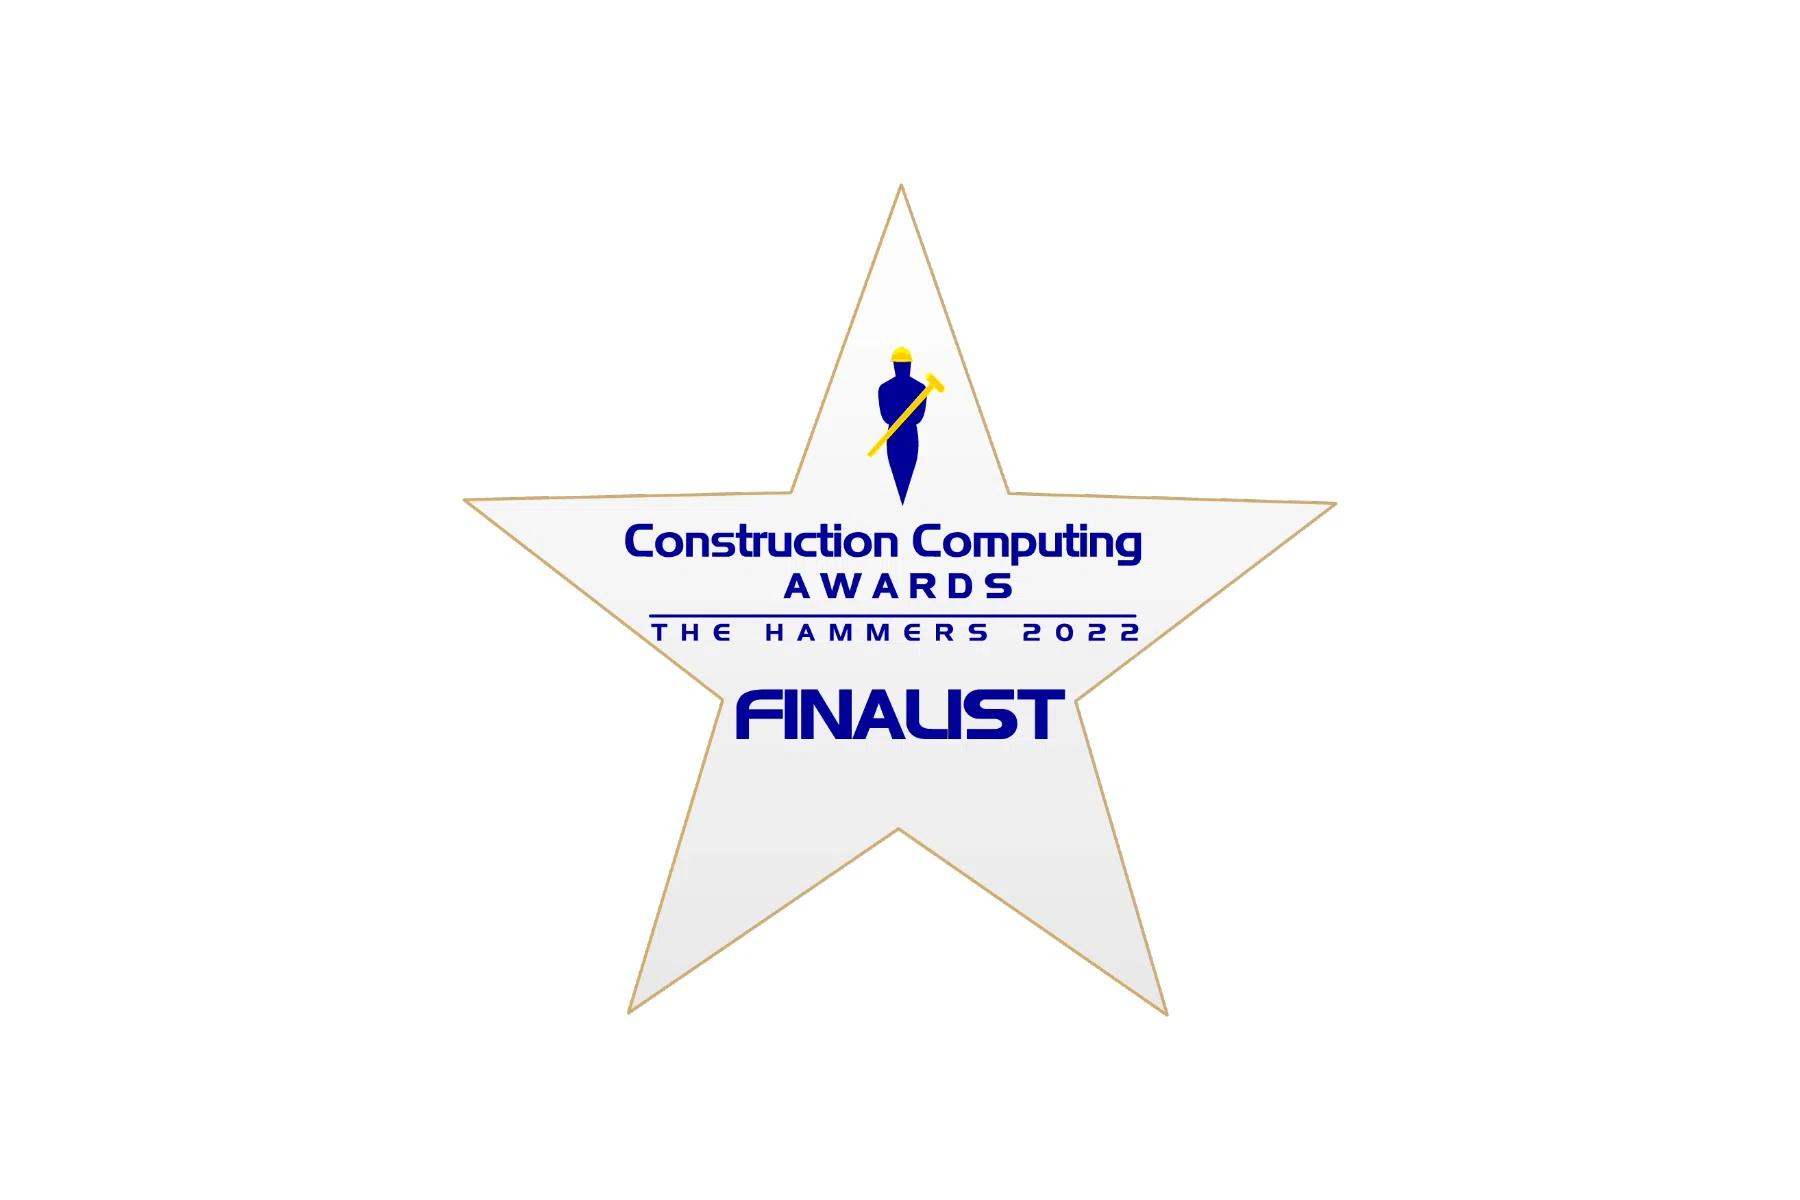 Construction Computing Awards finalist 2022